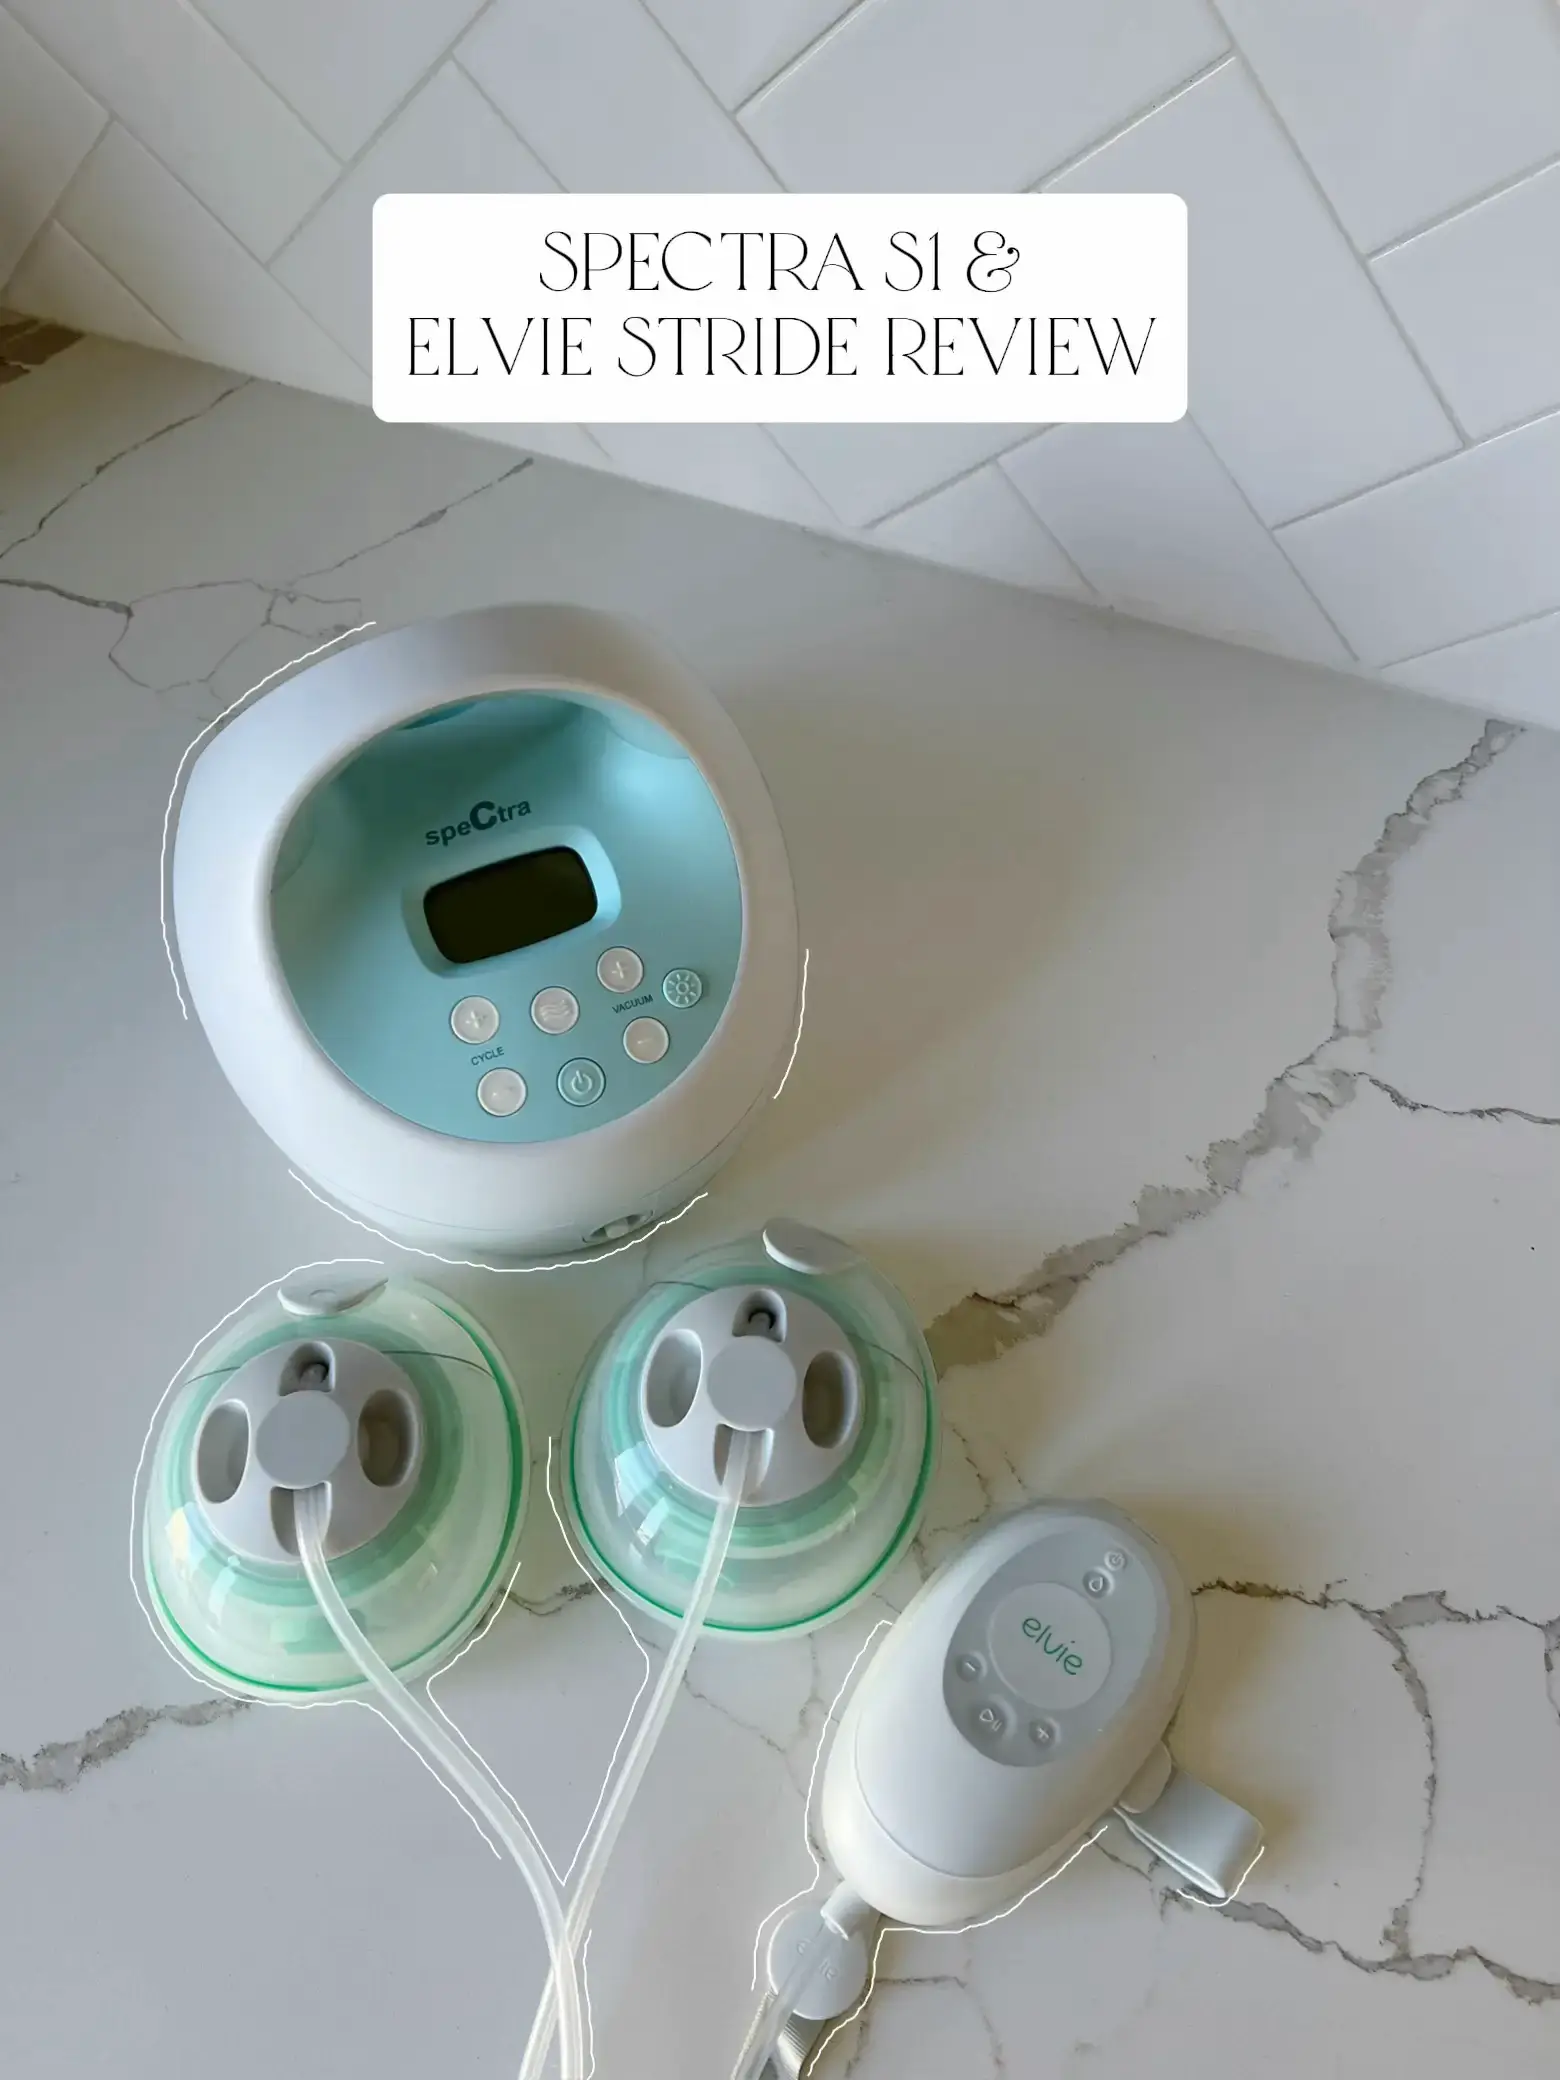 Elvie Stride Review